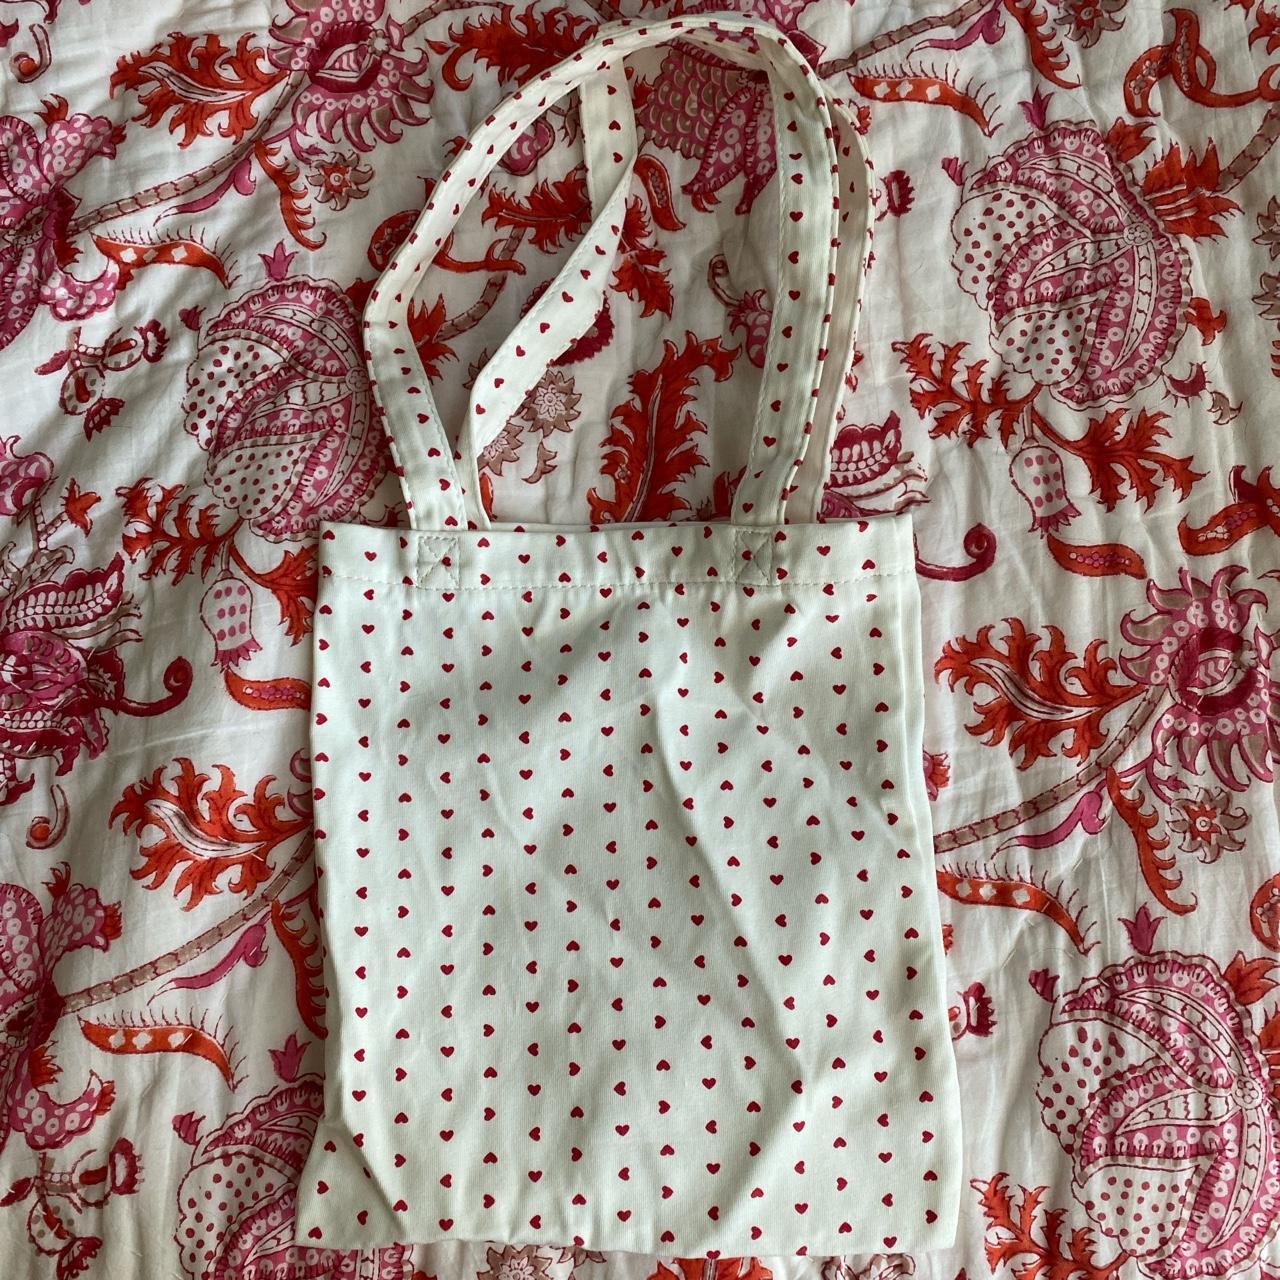 Mini Heart Tote Bag